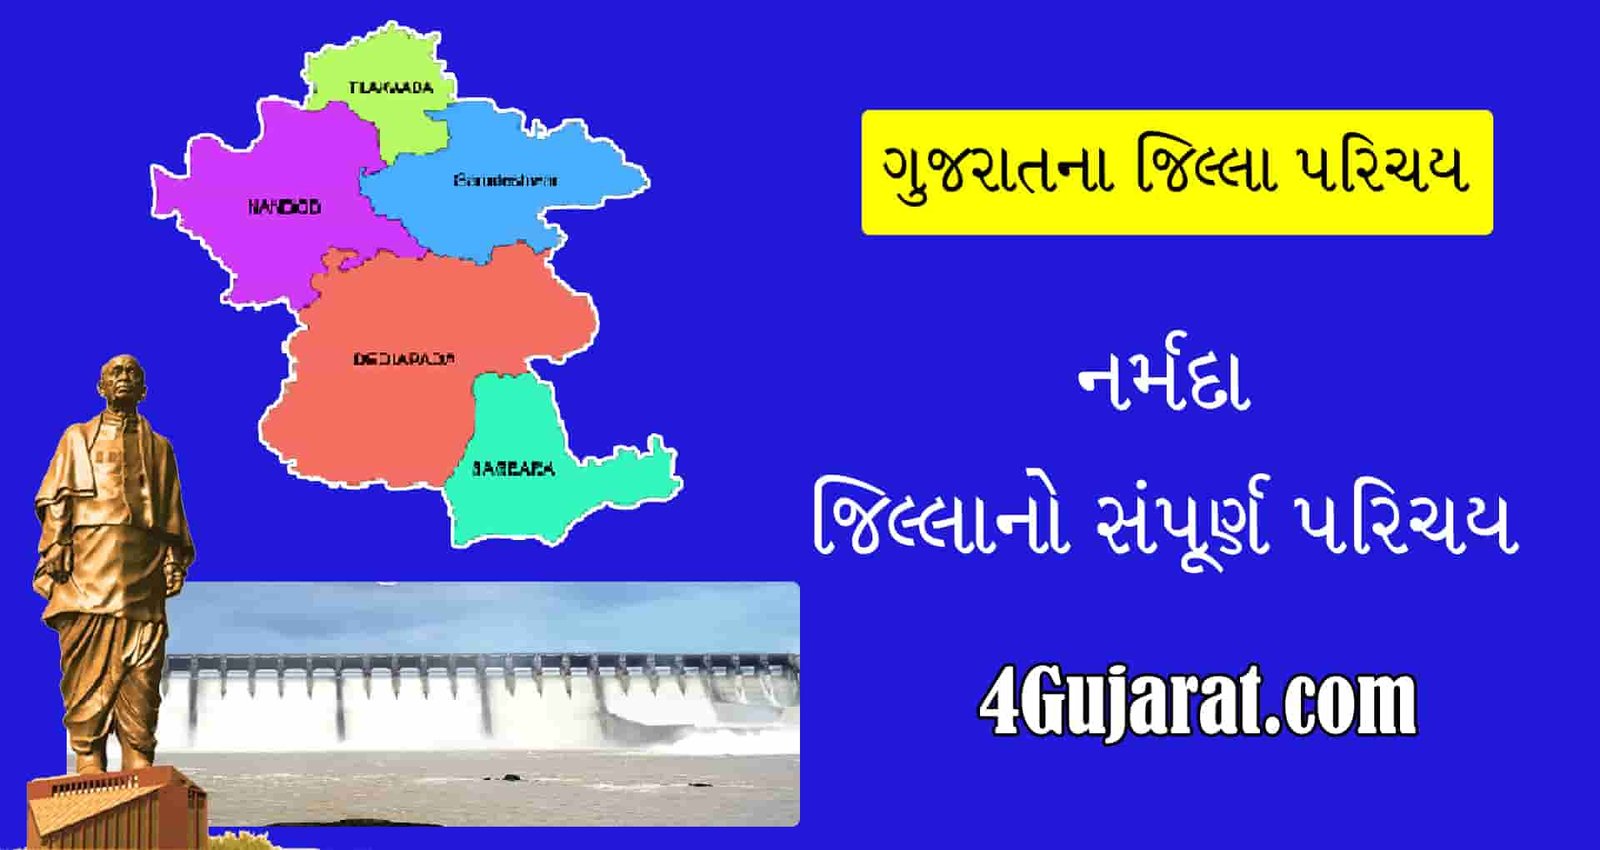 Narmada-District-gk